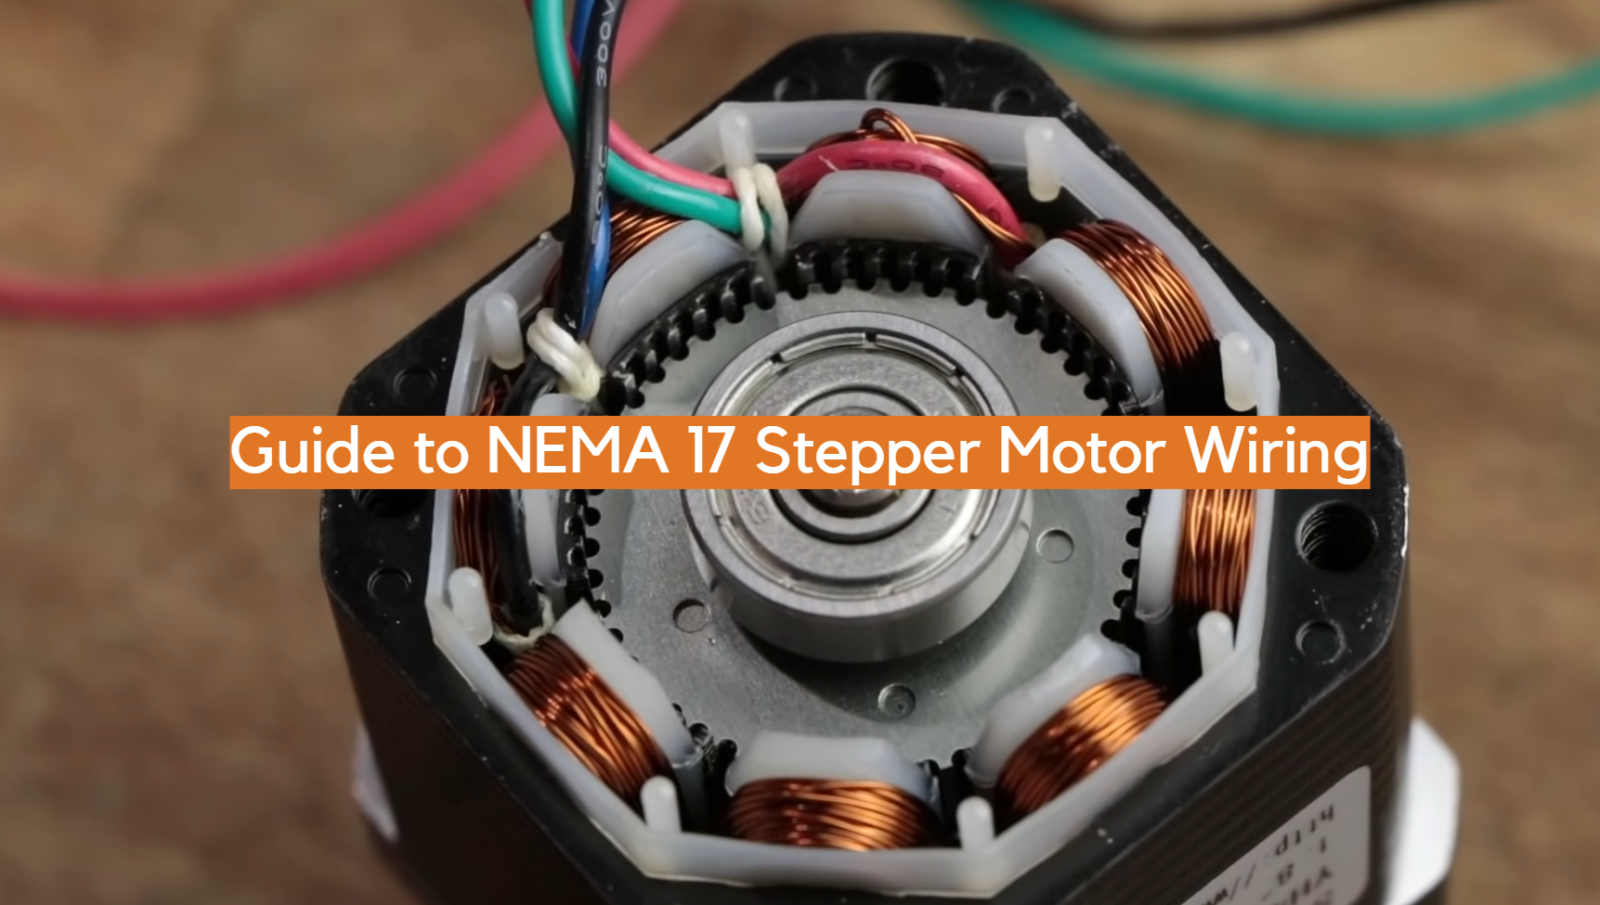 Guide to NEMA 17 Stepper Motor Wiring